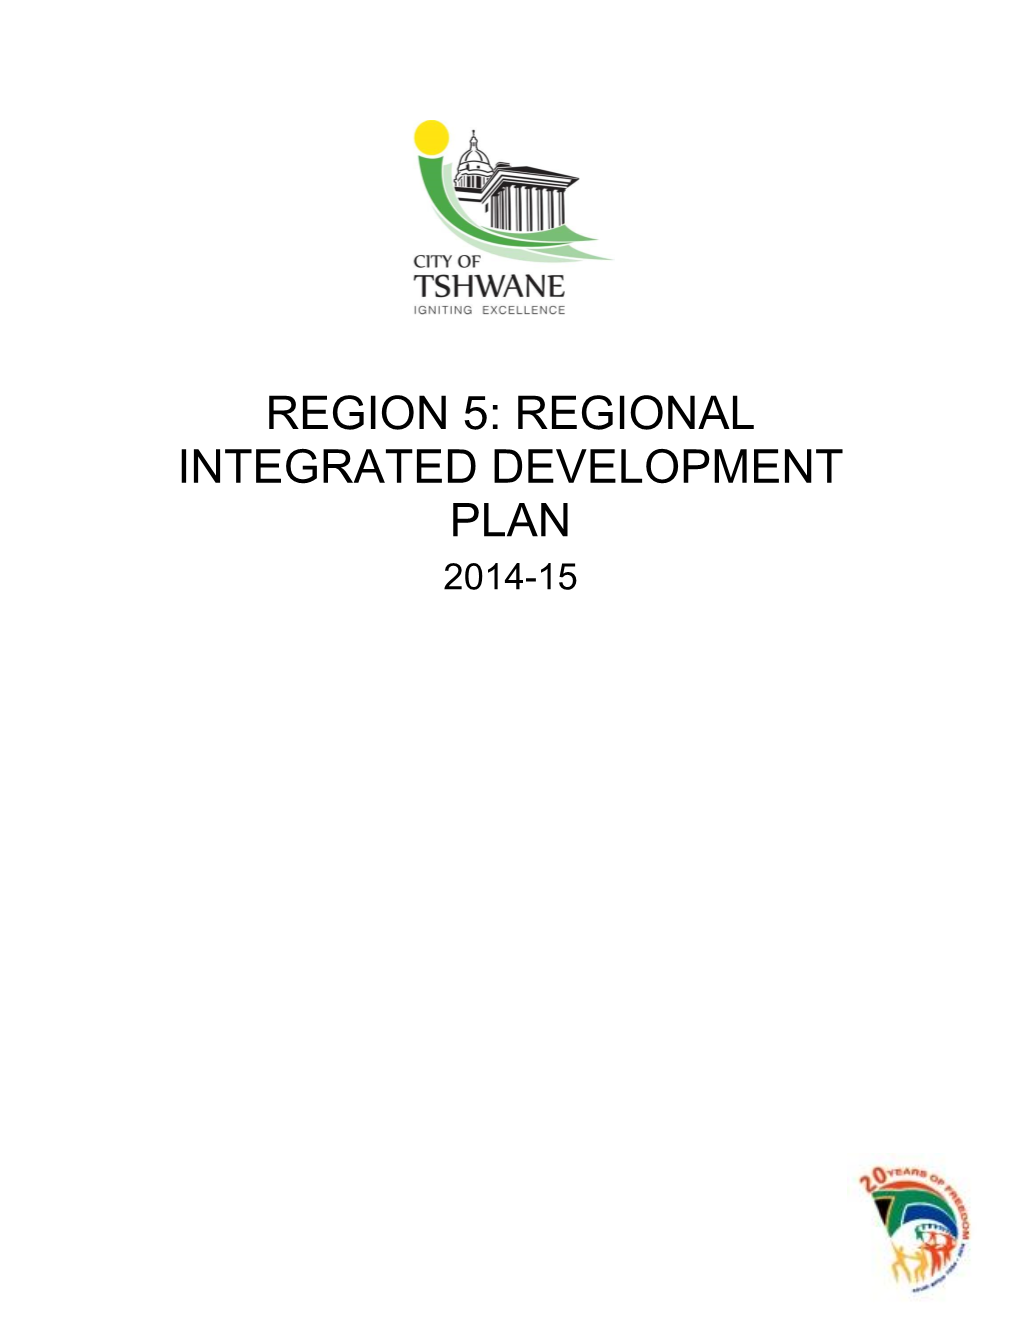 Region 5: Regional Integrated Development Plan 2014-15